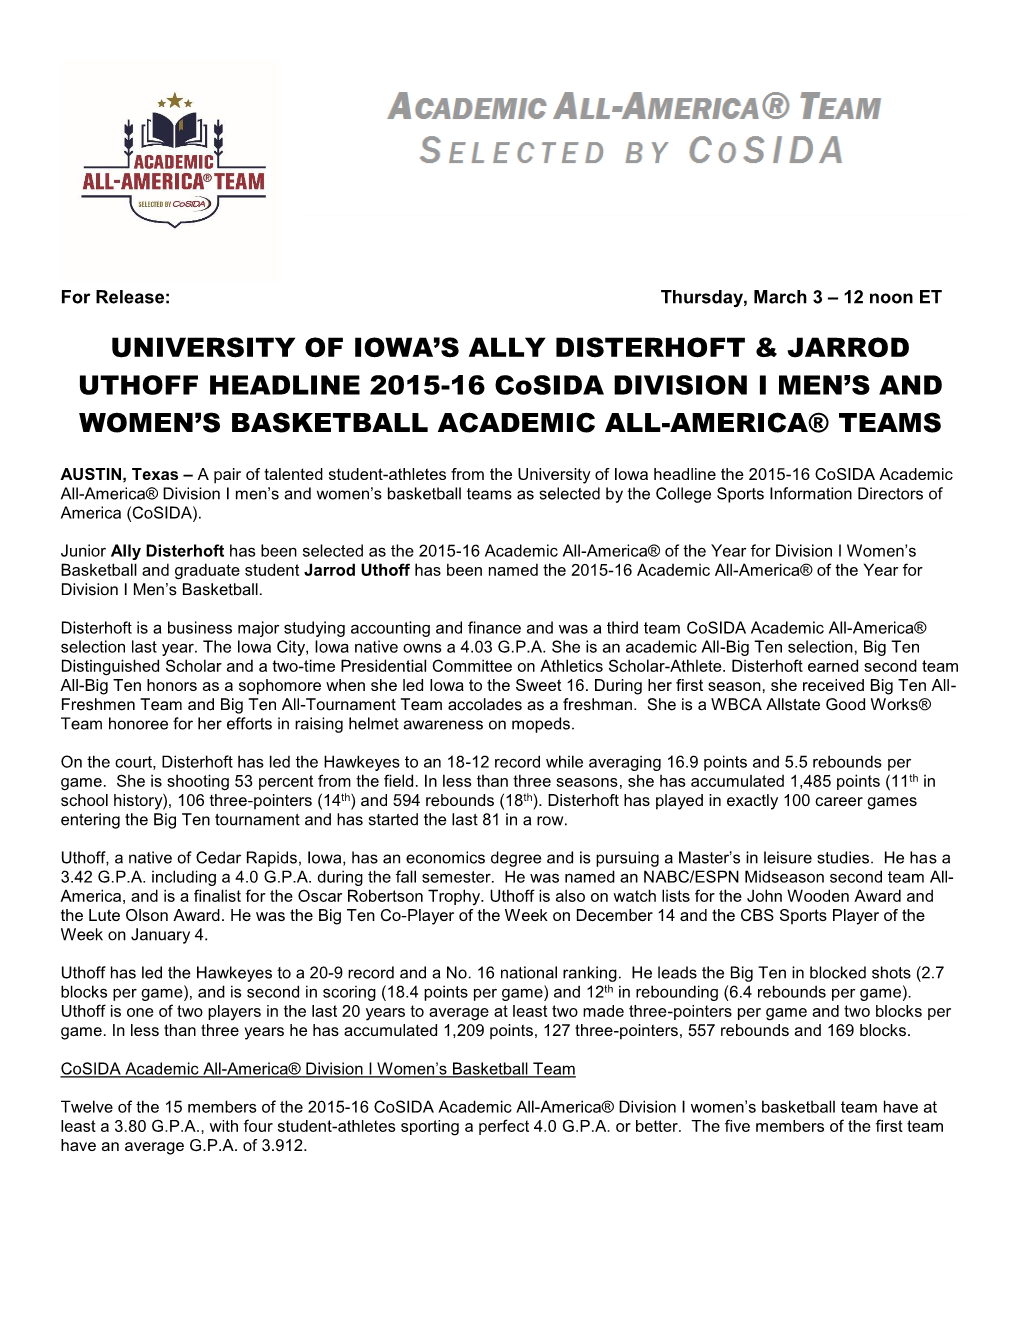 University of Iowa's Ally Disterhoft & Jarrod Uthoff